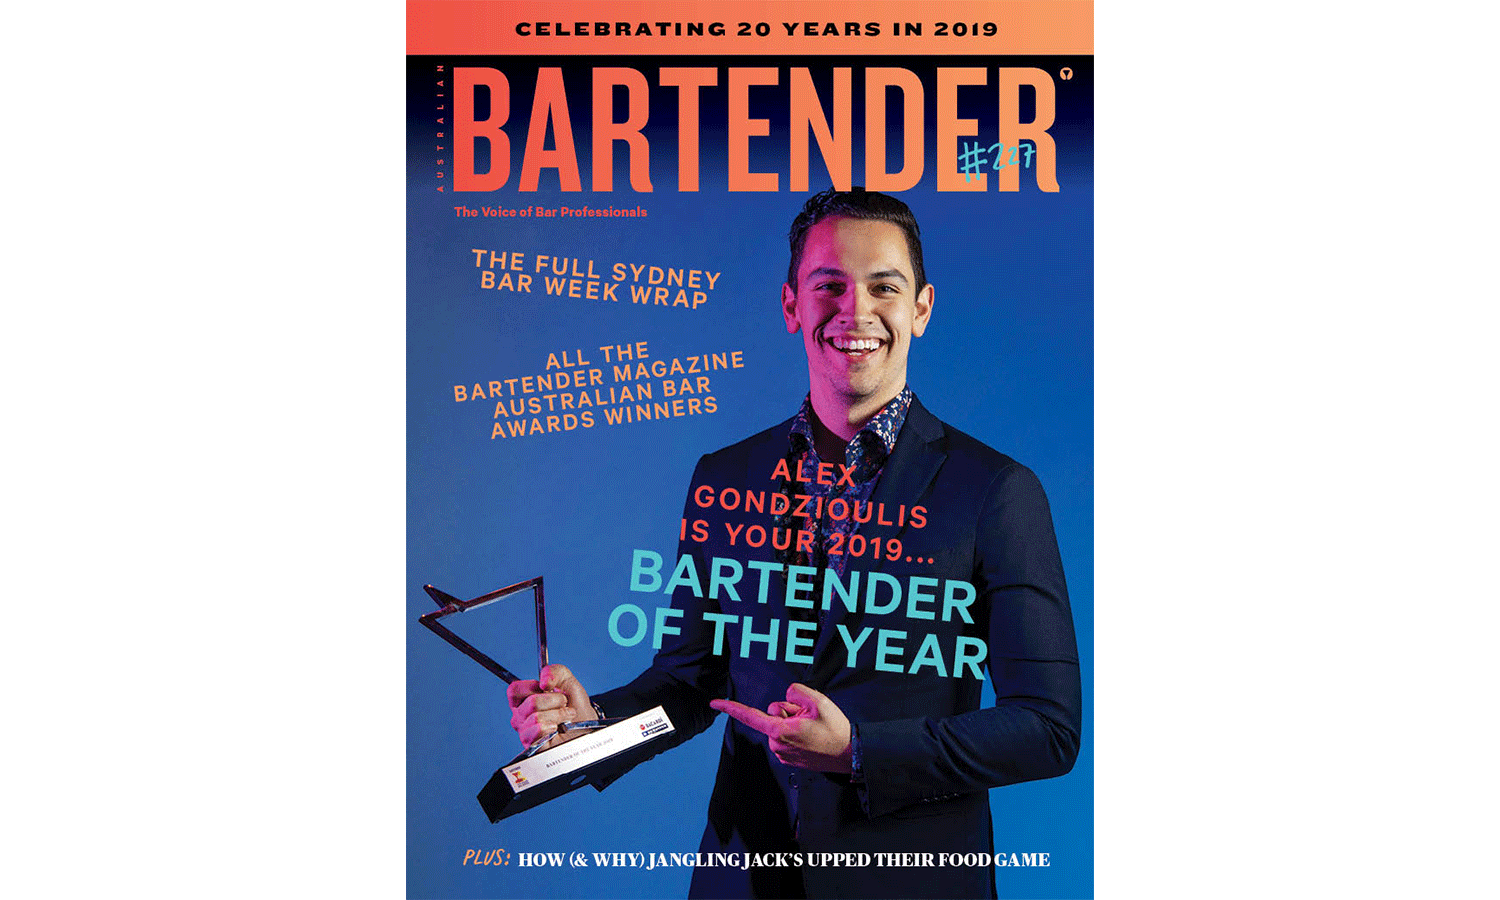 Bartender magazine